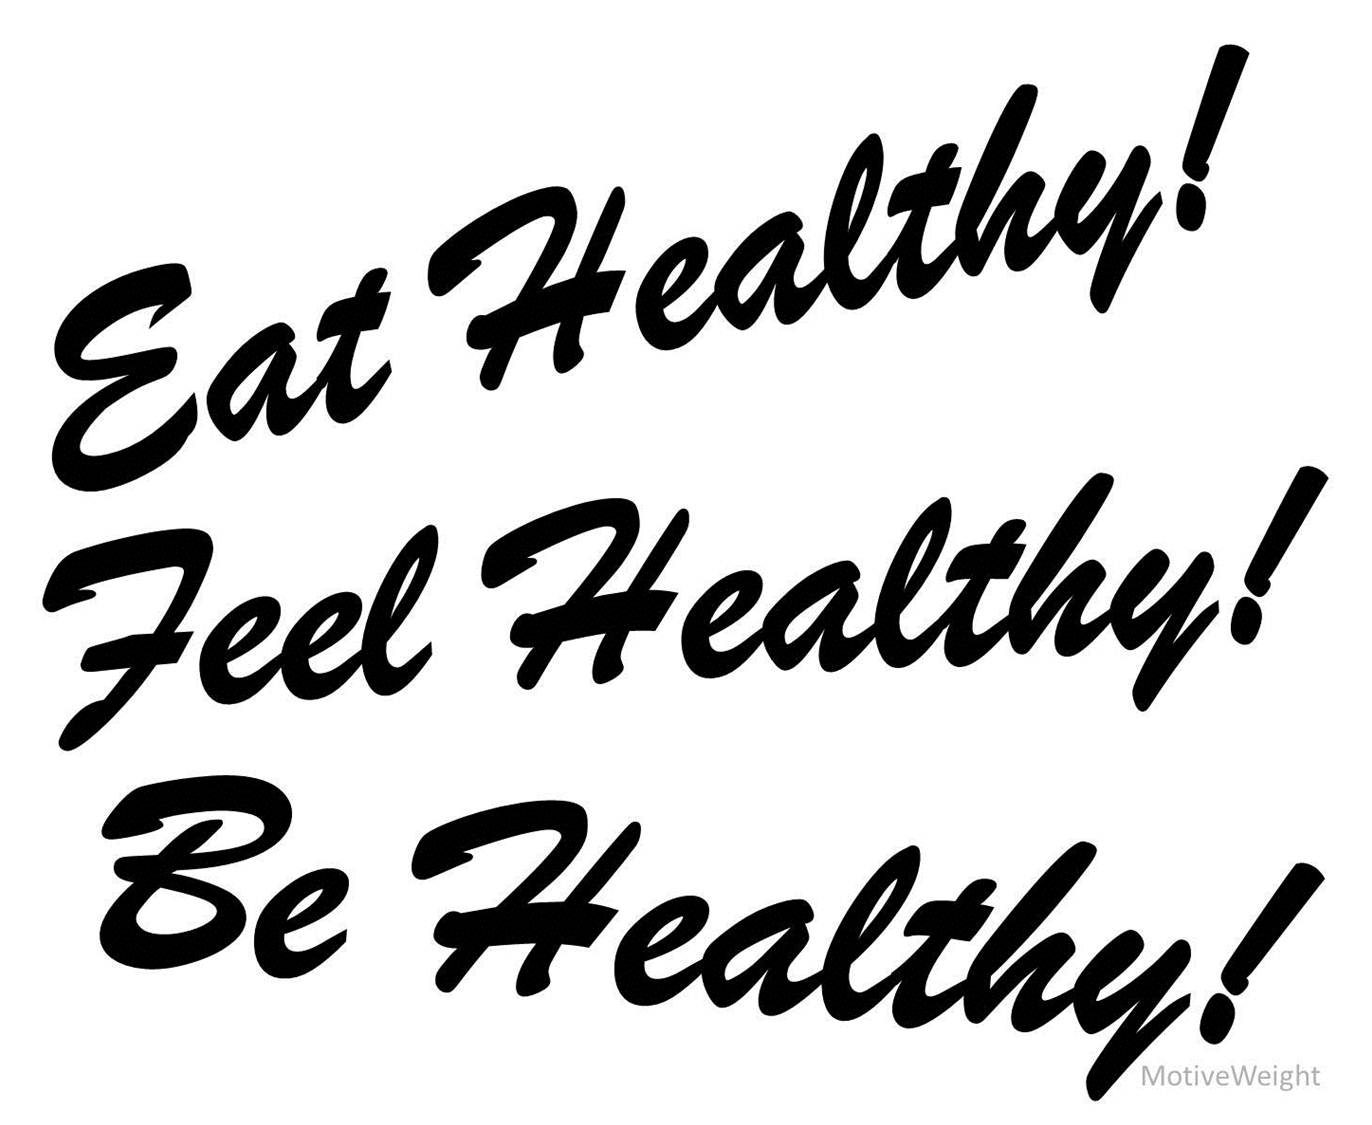 MotiveWeight: Eat Healthy Feel Healthy Be Healthy